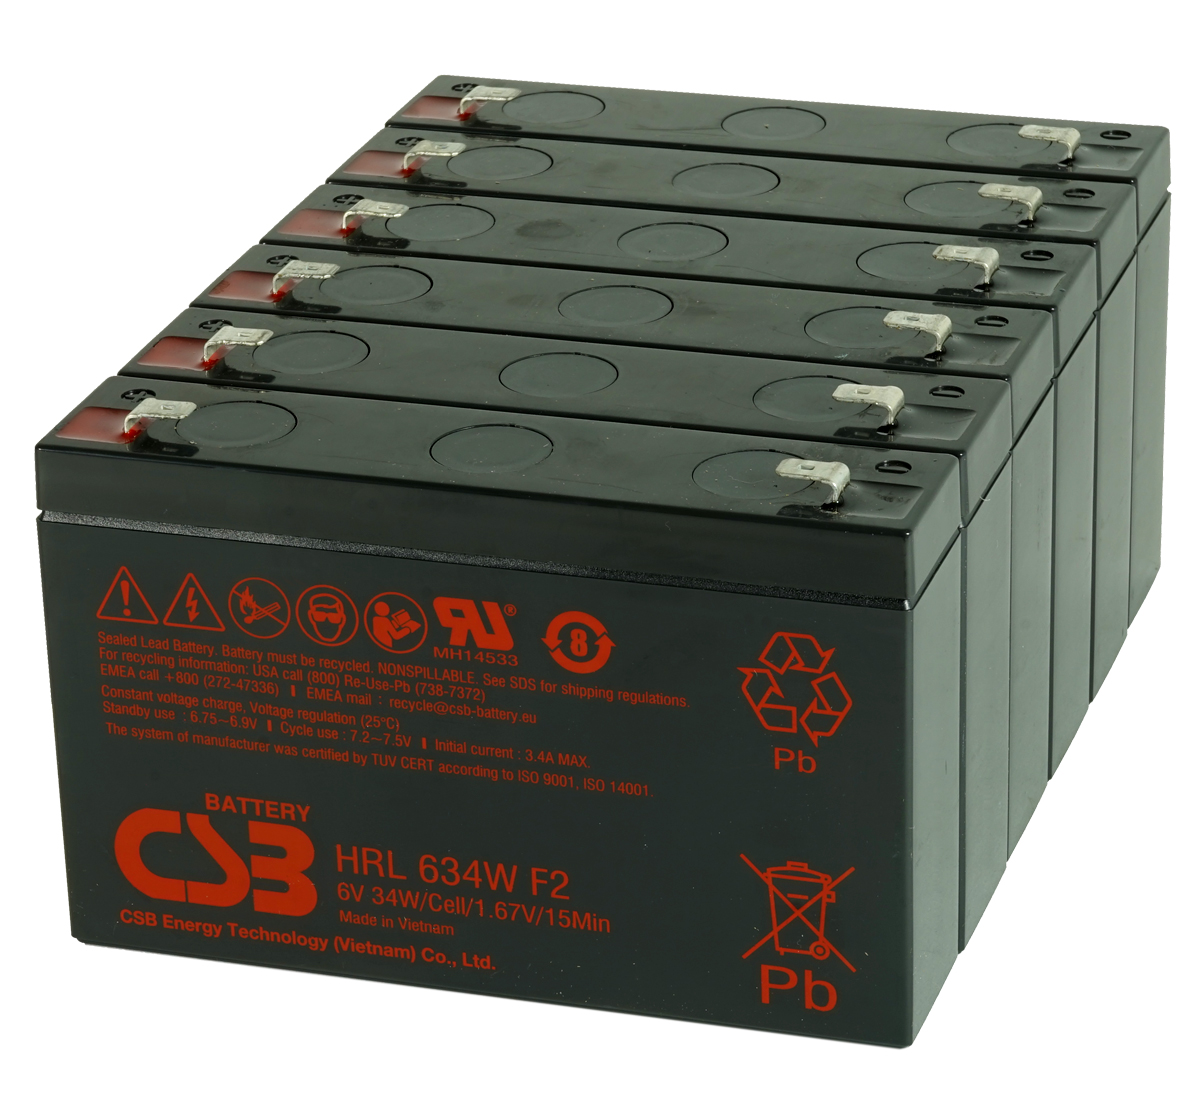 MDS68773 UPS Battery Kit for MGE / Eaton UPS